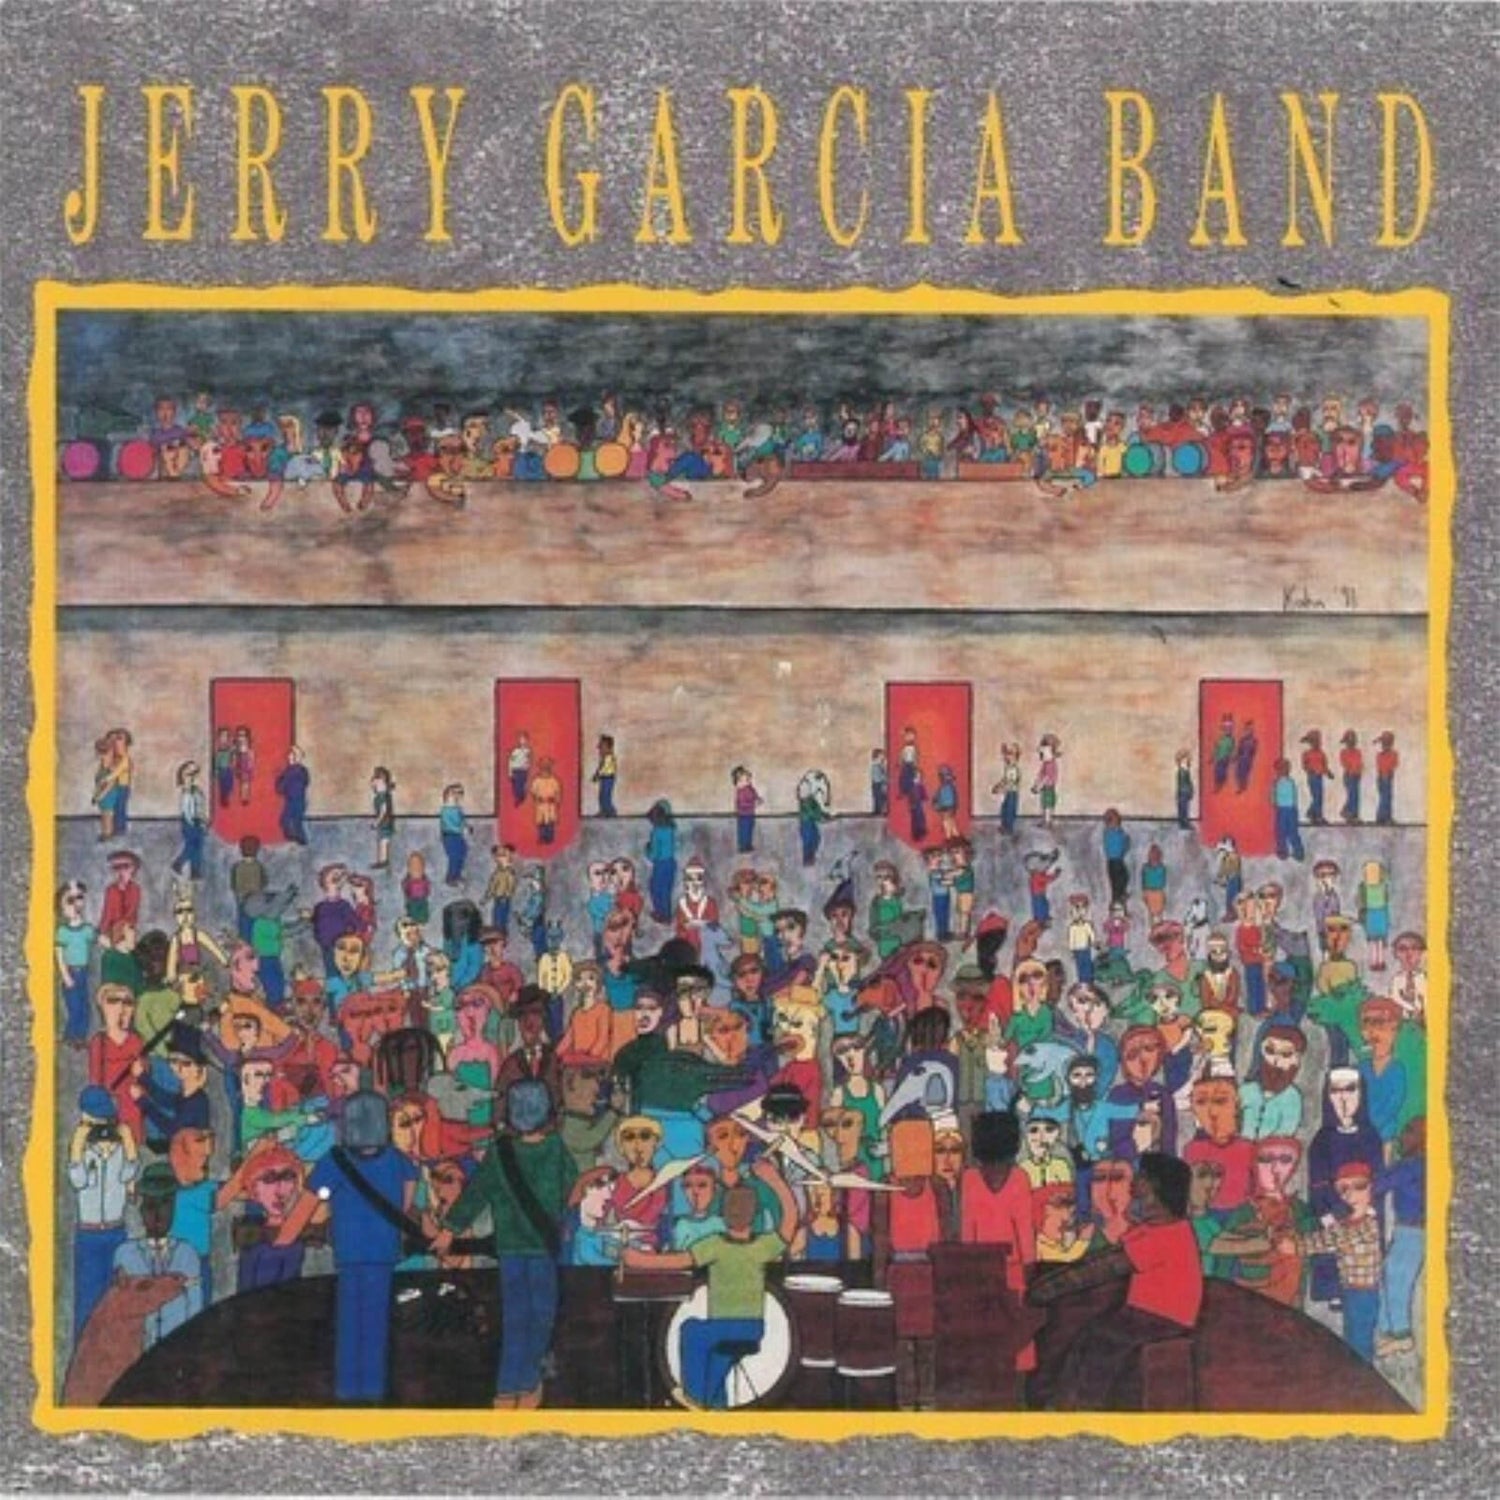 Jerry Garcia Band (30th Anniversary) 180g 5xLP